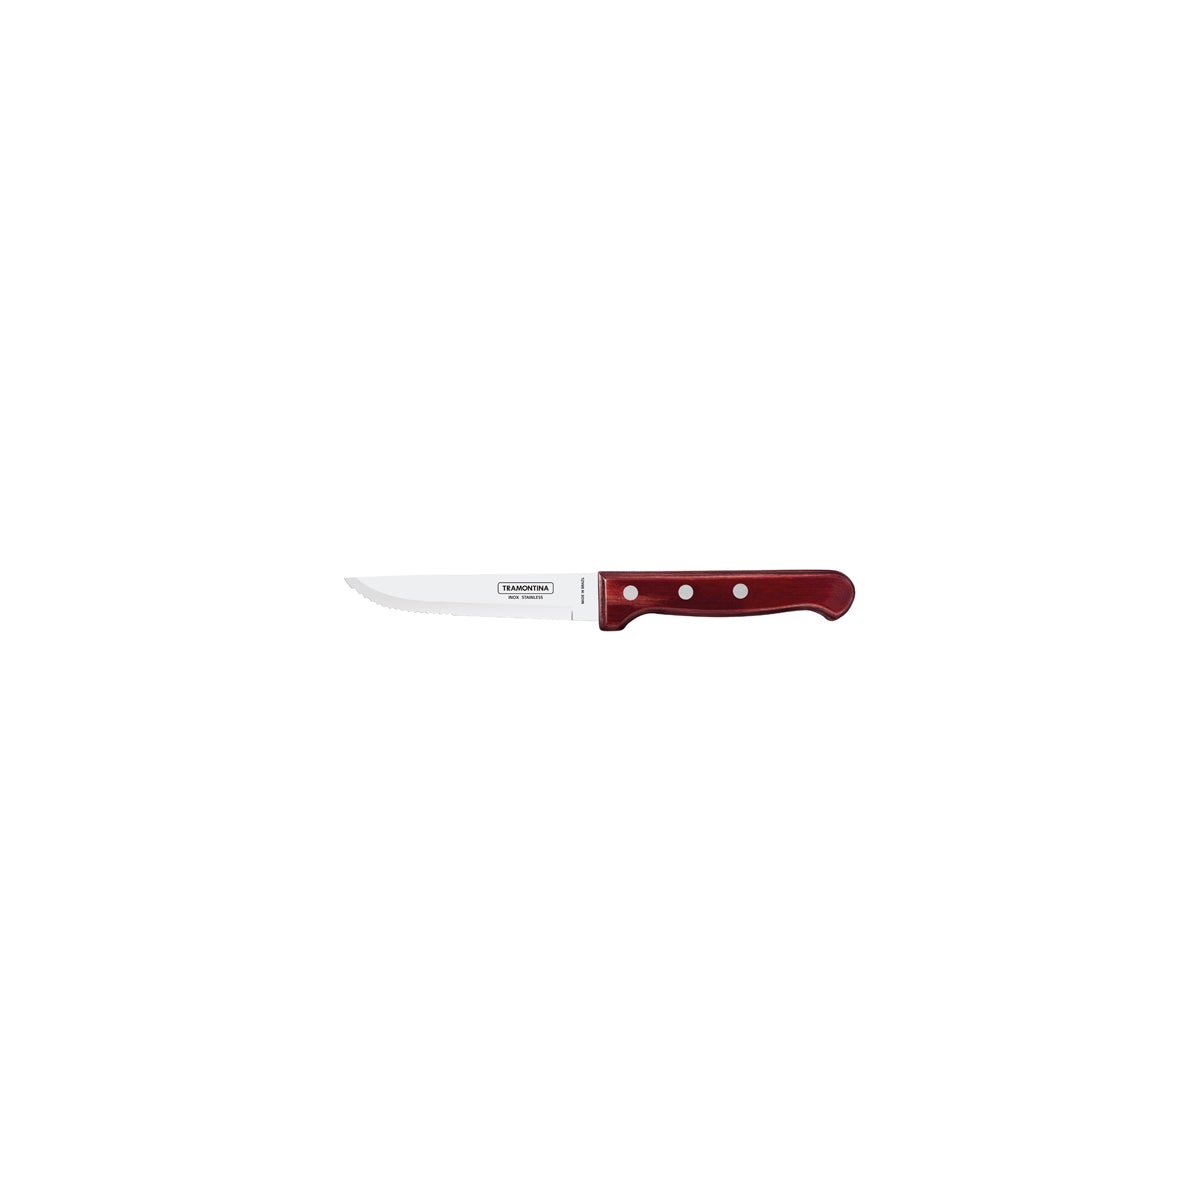 TM21413/075 Tramontina Churrasco Steak Knife Gaucho with Polywood Handle Red 127mm Tomkin Australia Hospitality Supplies